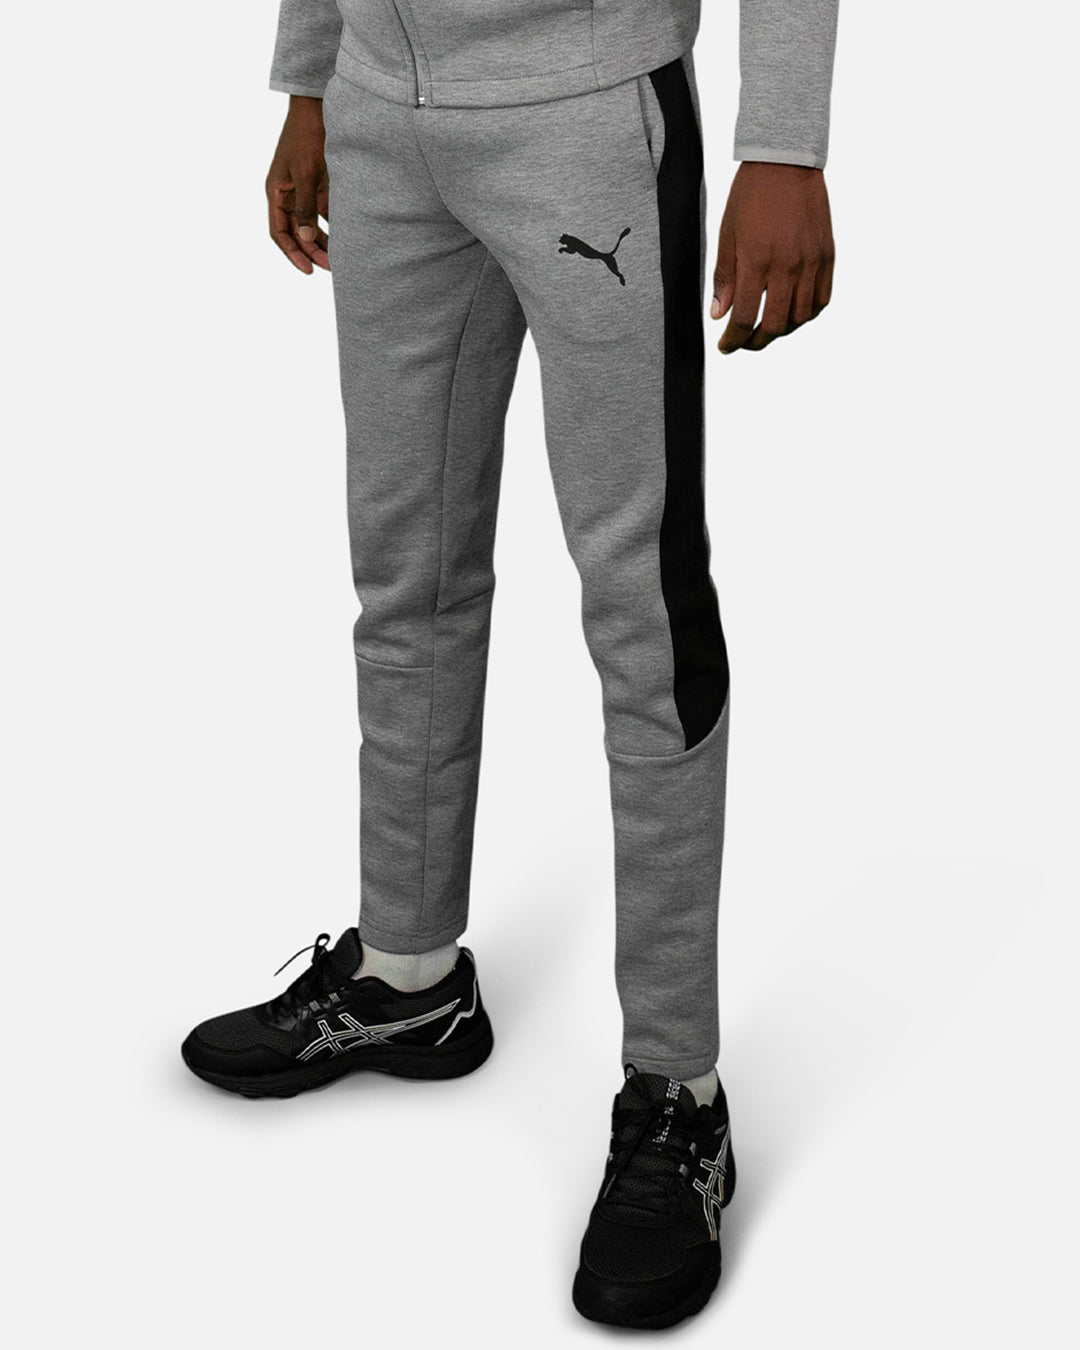 Puma Evo Stripe Pant, Grey / Black, Footasylum